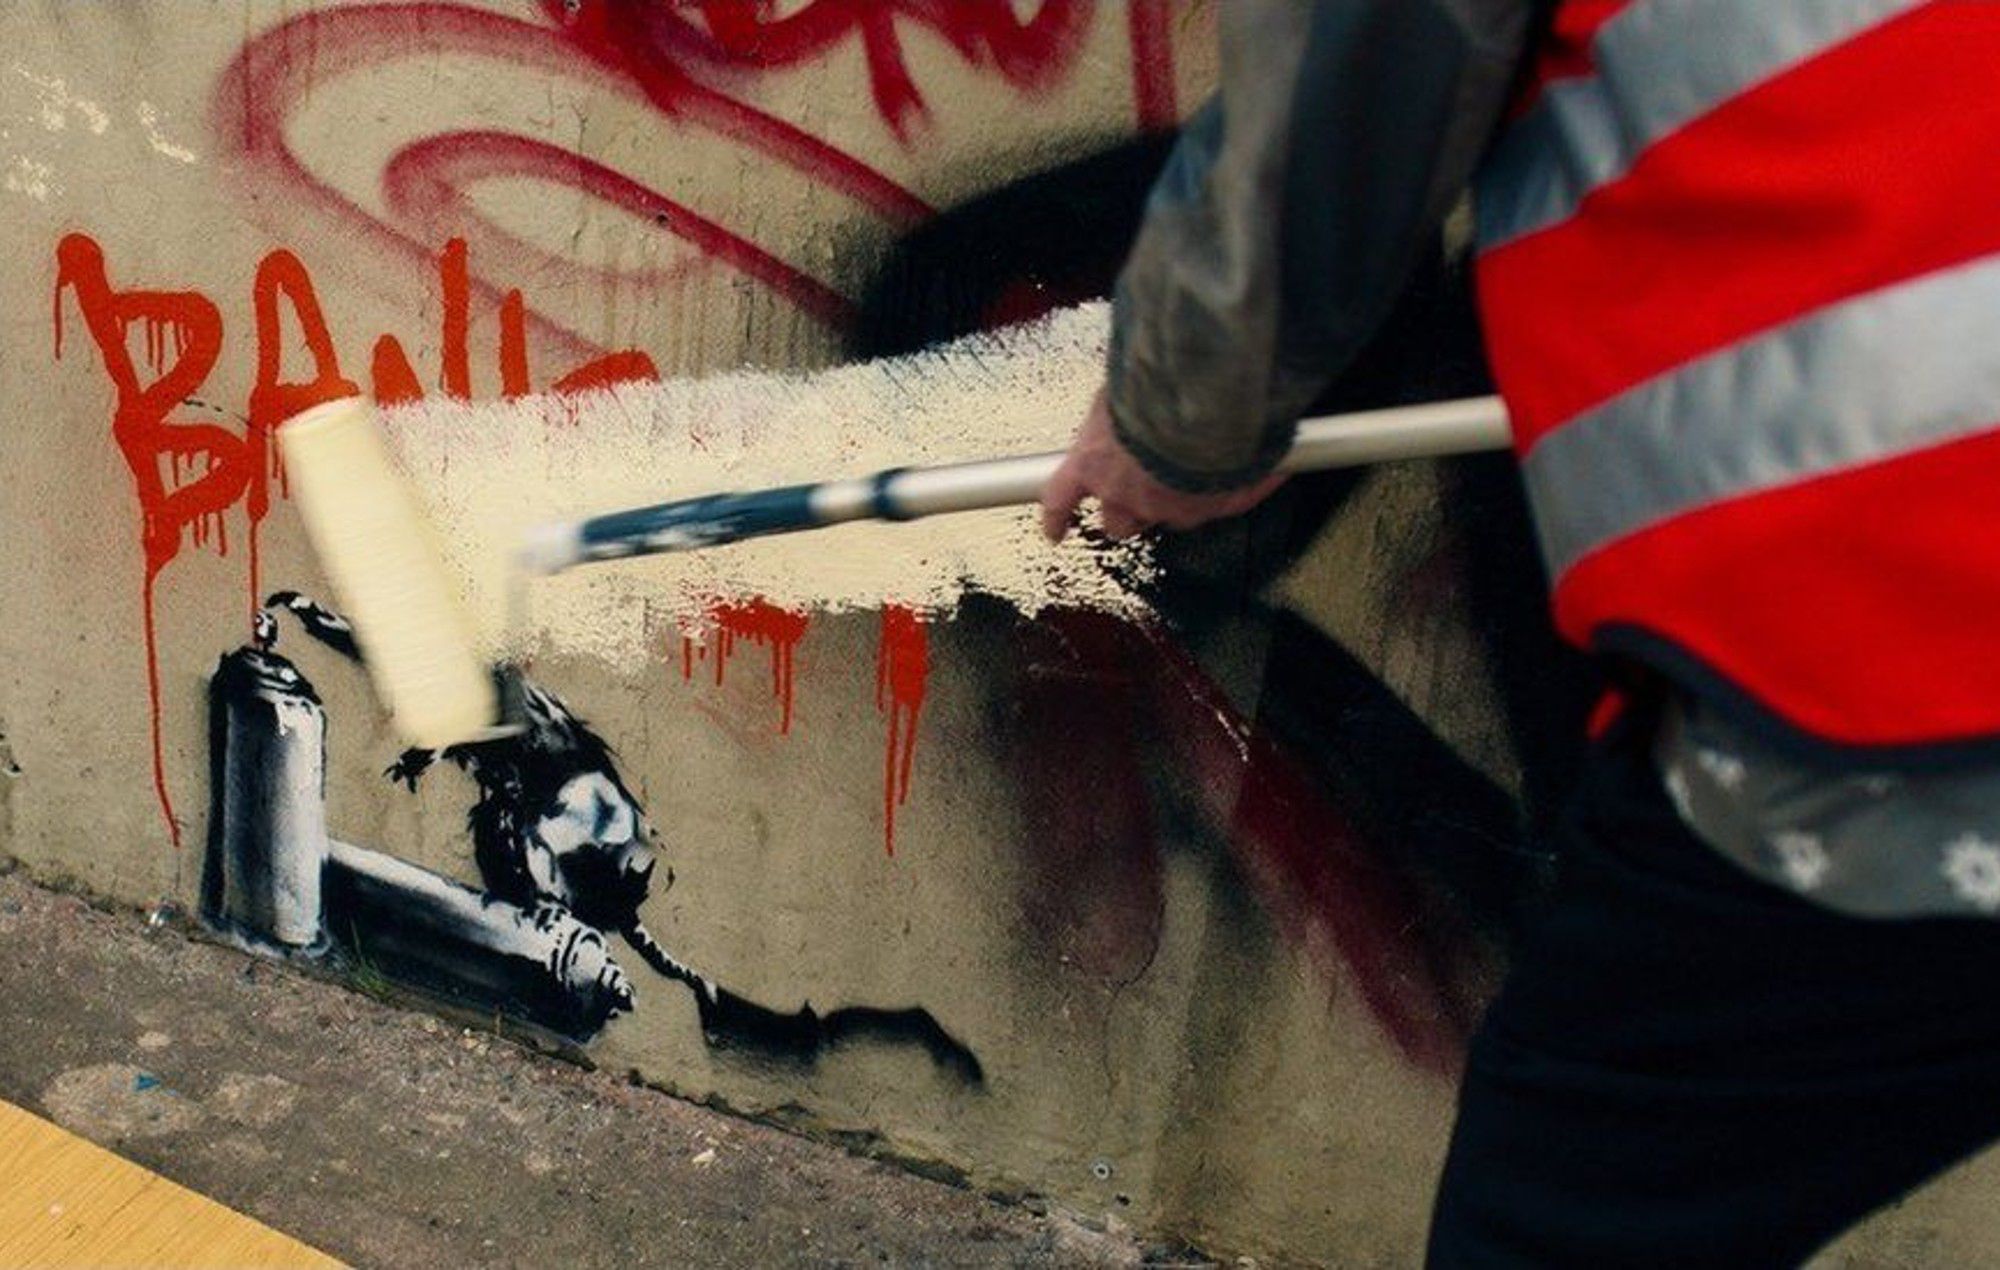 The Outlaws Banksy Artwork